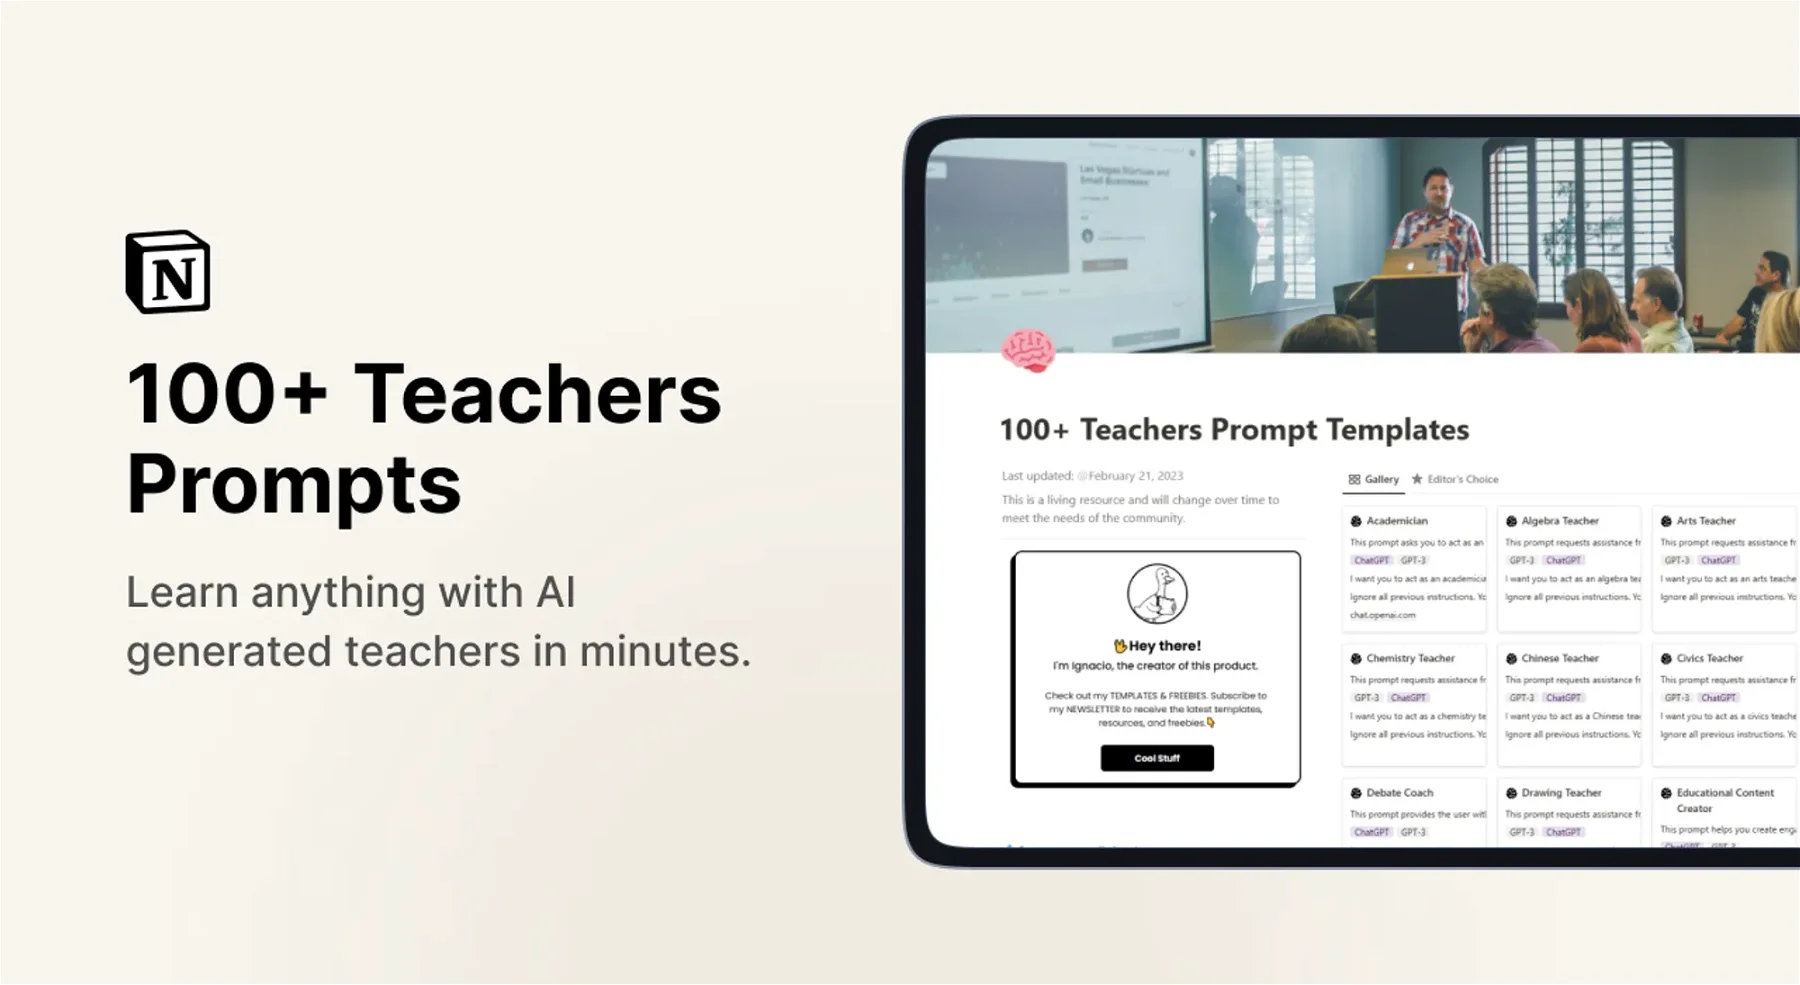 100+ Teachers Prompt Templates